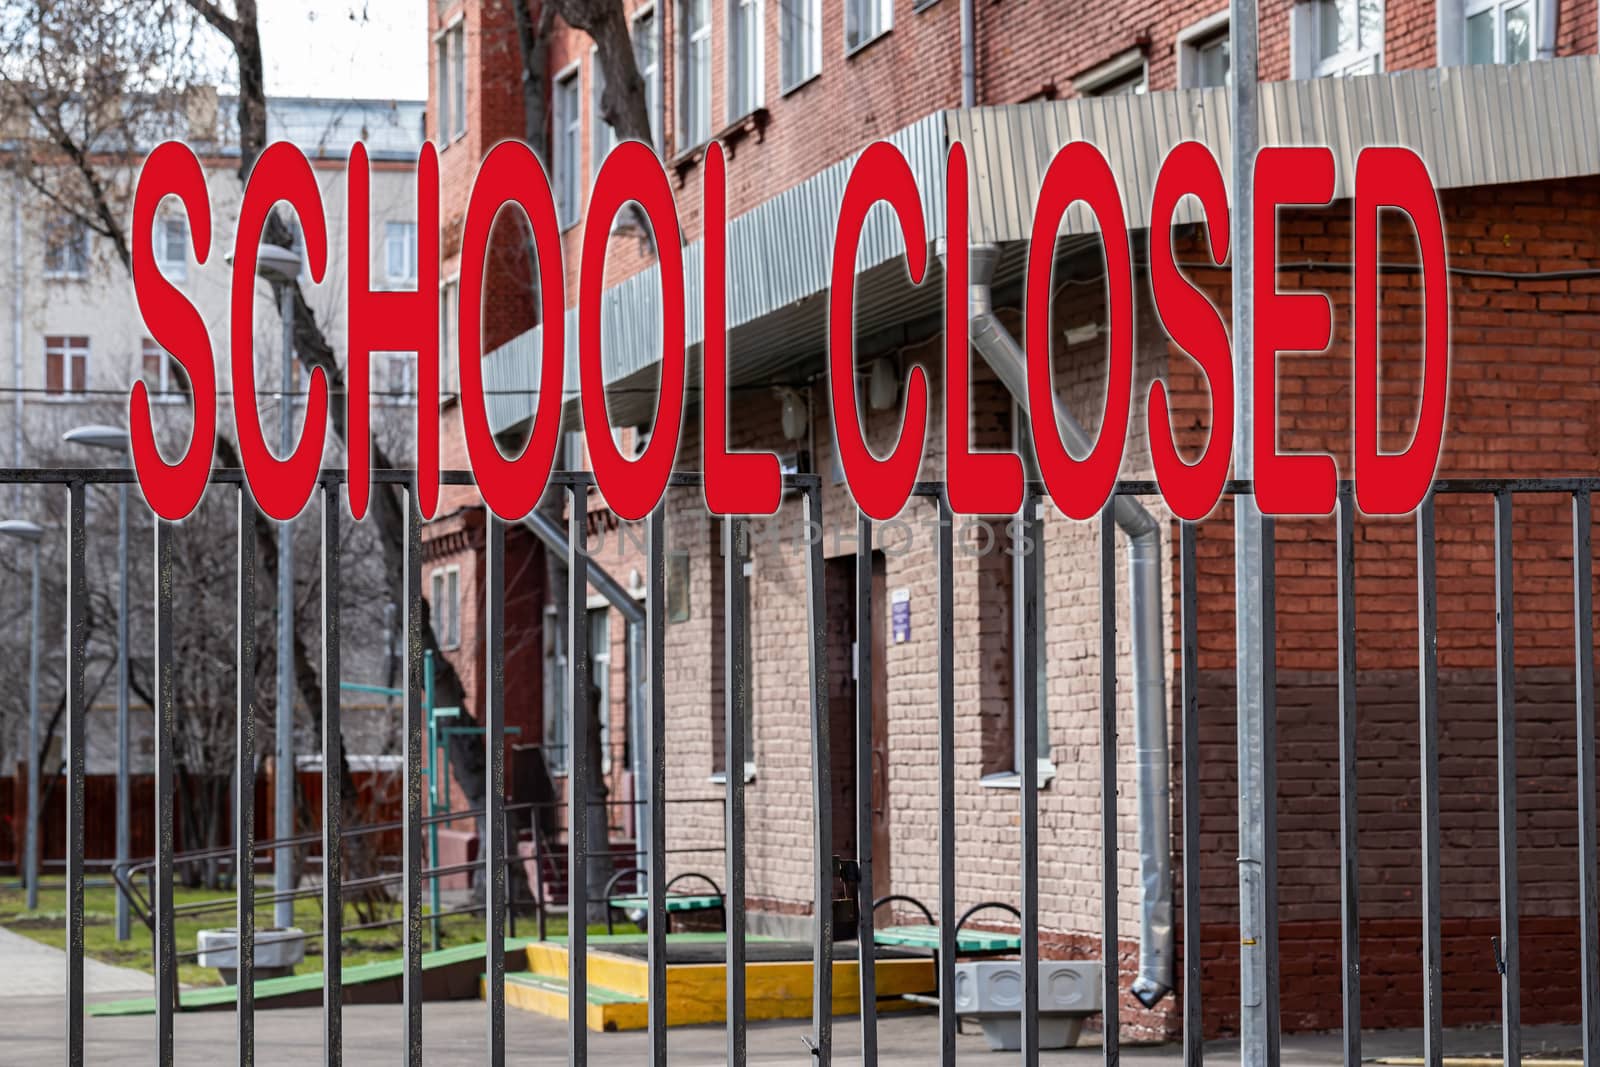 School closed due to Coronavirus. School closure under COVID-19 global pandemic. by bonilook